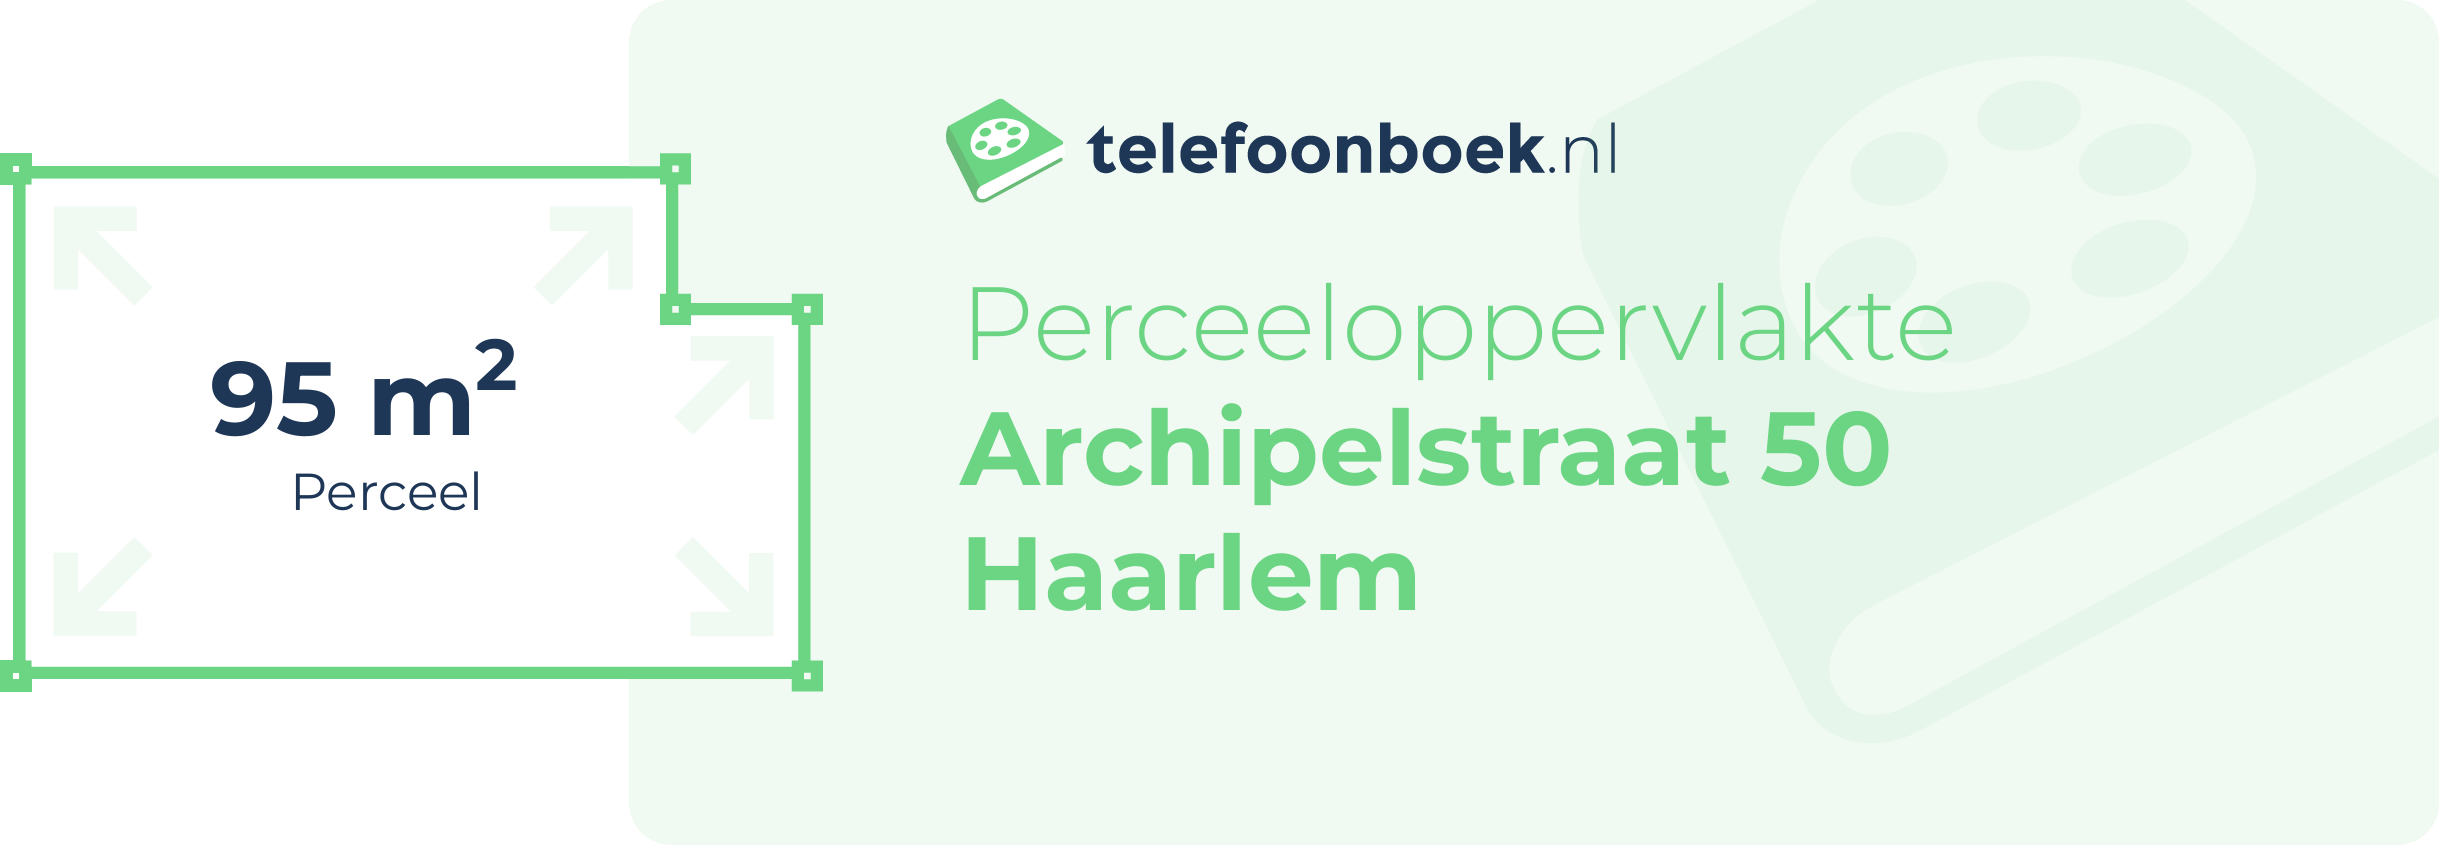 Perceeloppervlakte Archipelstraat 50 Haarlem